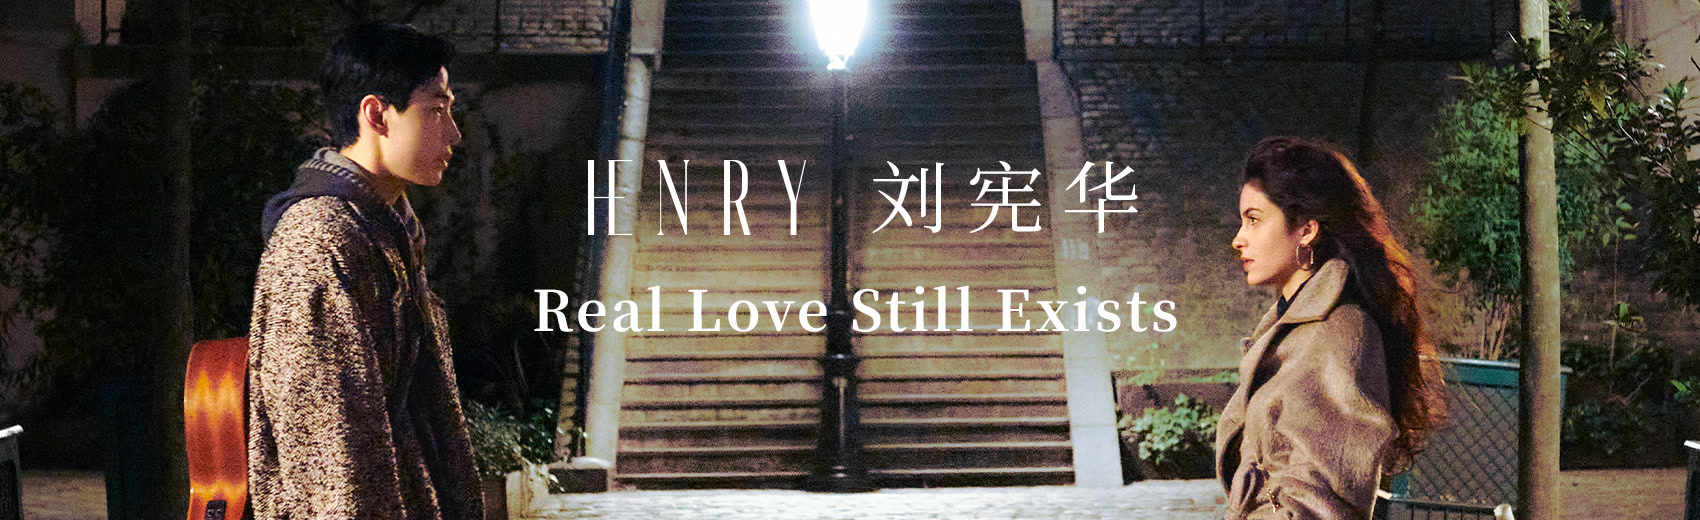 HENRY刘宪华《Real Love Still Exists (feat. Yuna)》MV